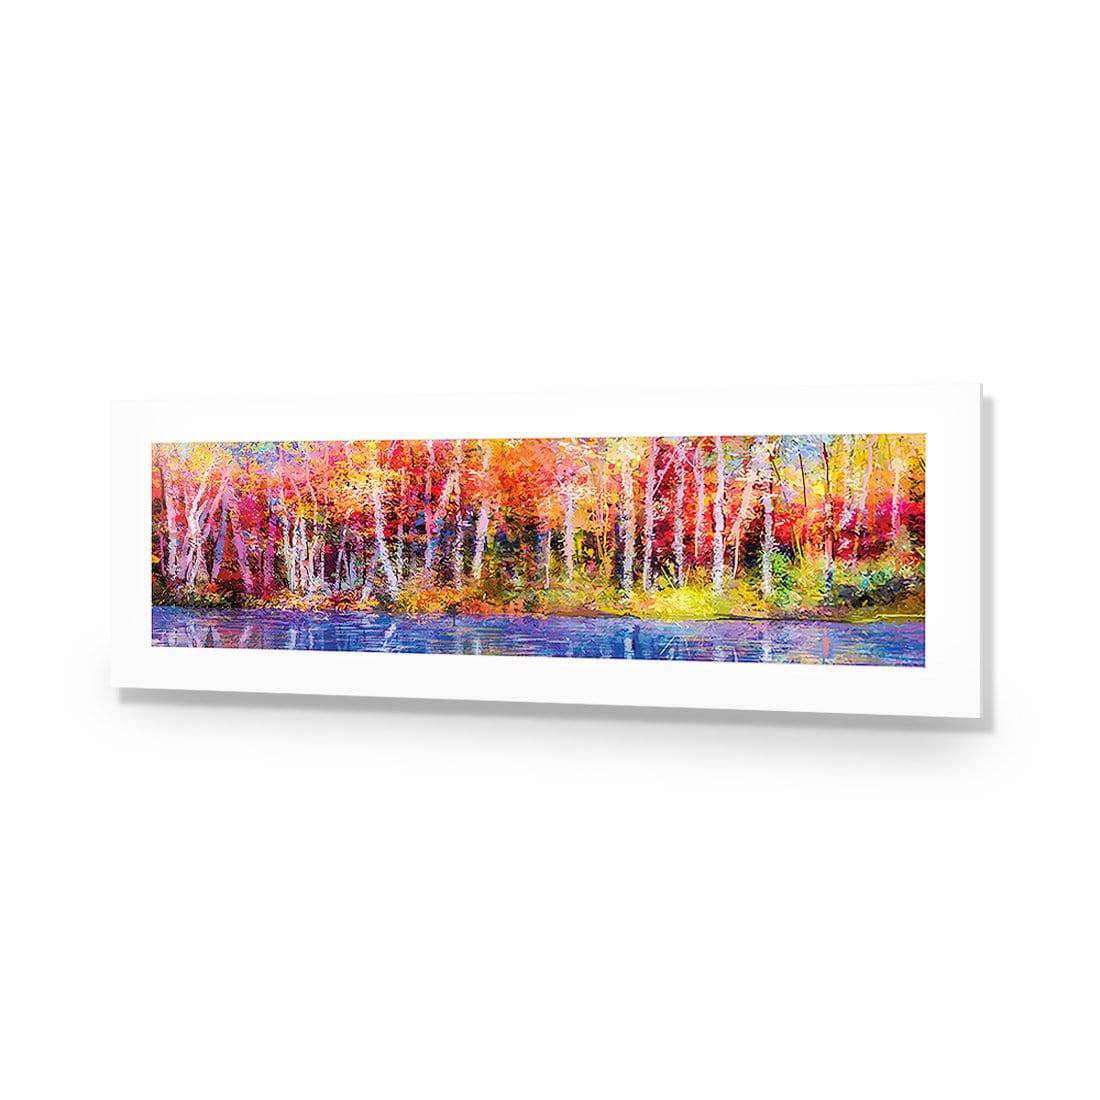 Rainbow Tree Forest, Long-Acrylic-Wall Art Design-With Border-Acrylic - No Frame-60x20cm-Wall Art Designs